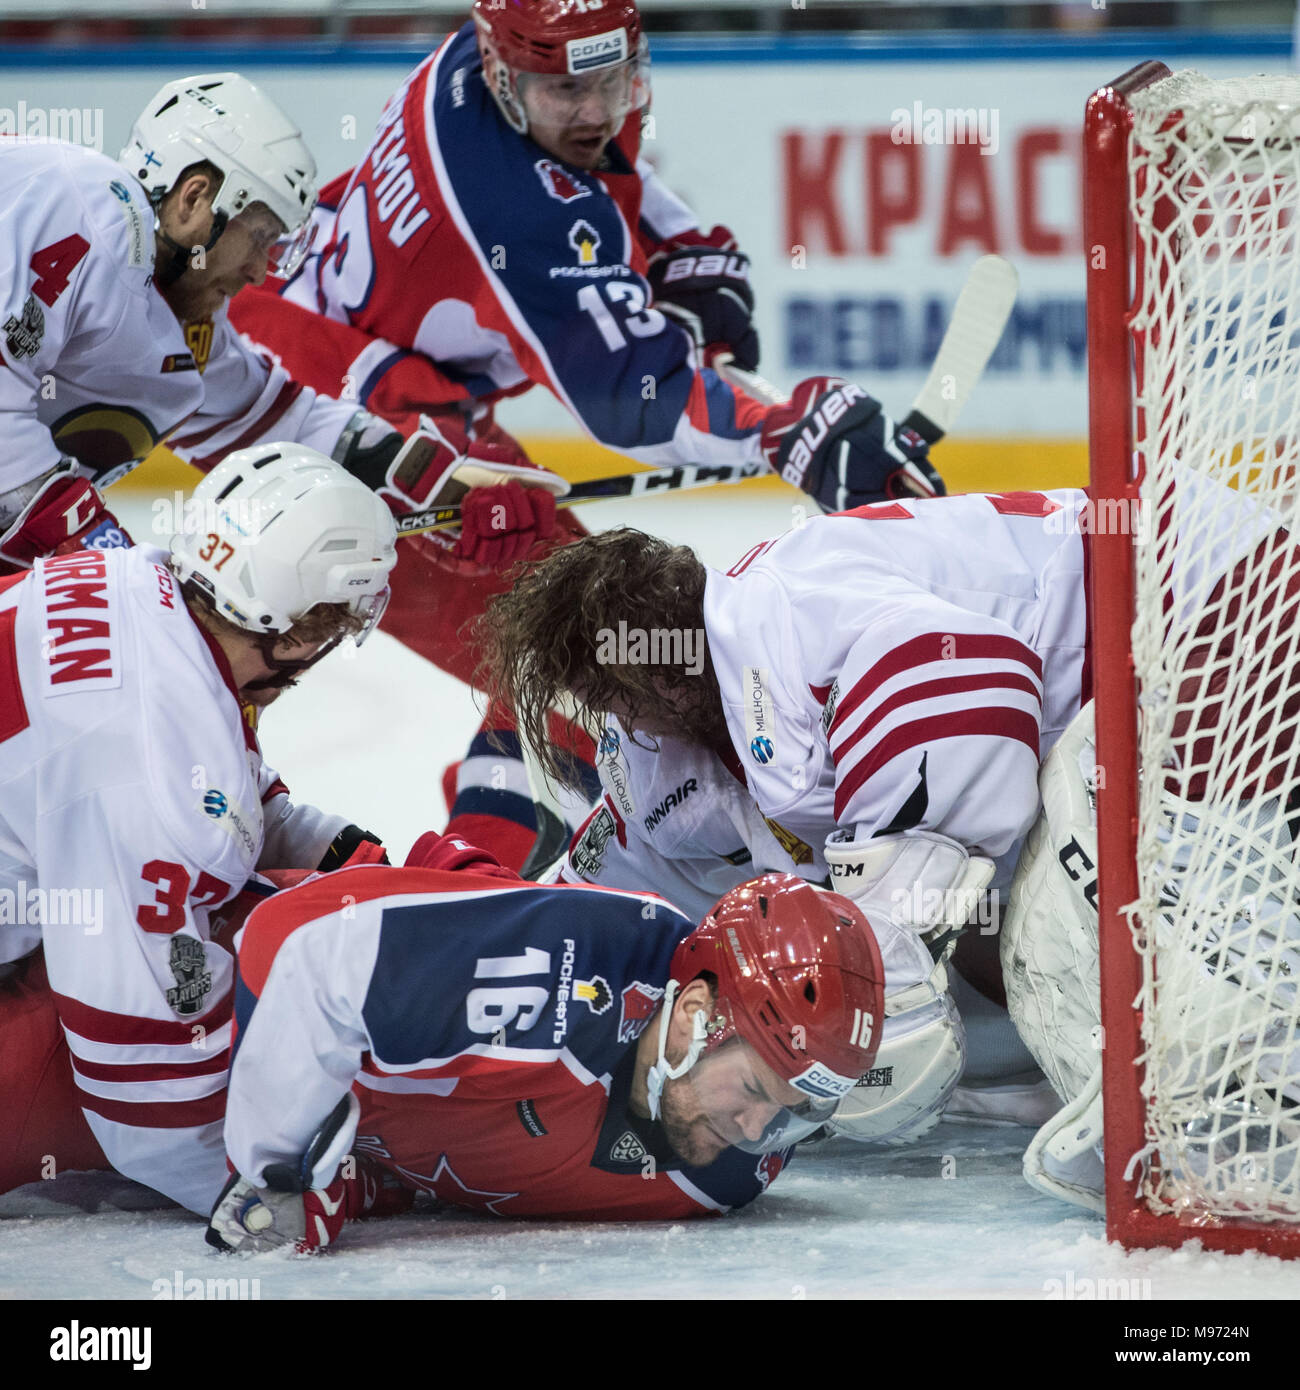 Jokerit beats CSKA during KHL Play-off second round game - Xinhua